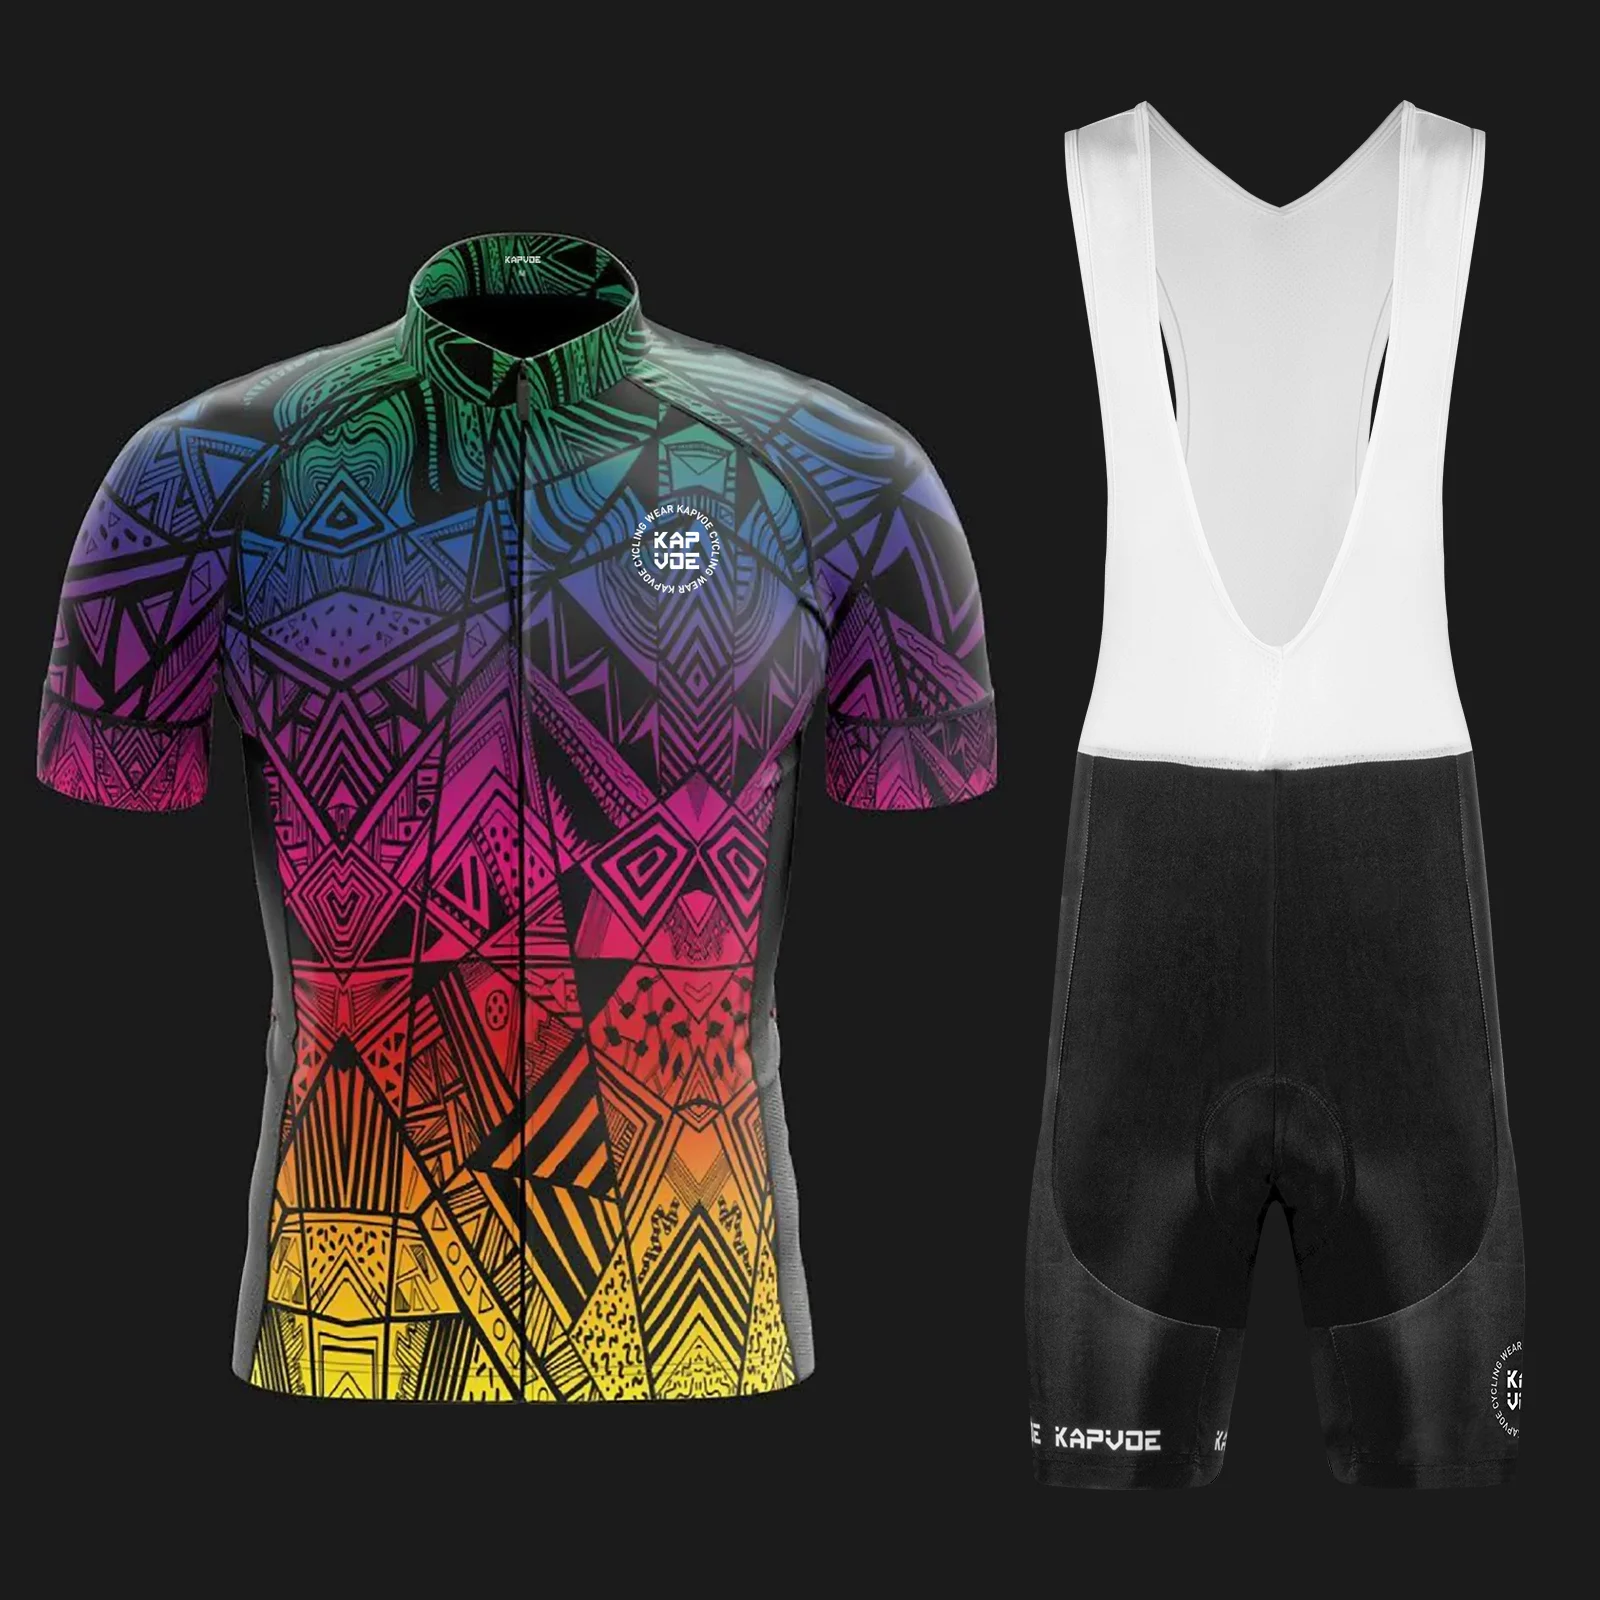 Bib Set Details about   Men's Cycling Short Sleeve Set Bicycle Shirt